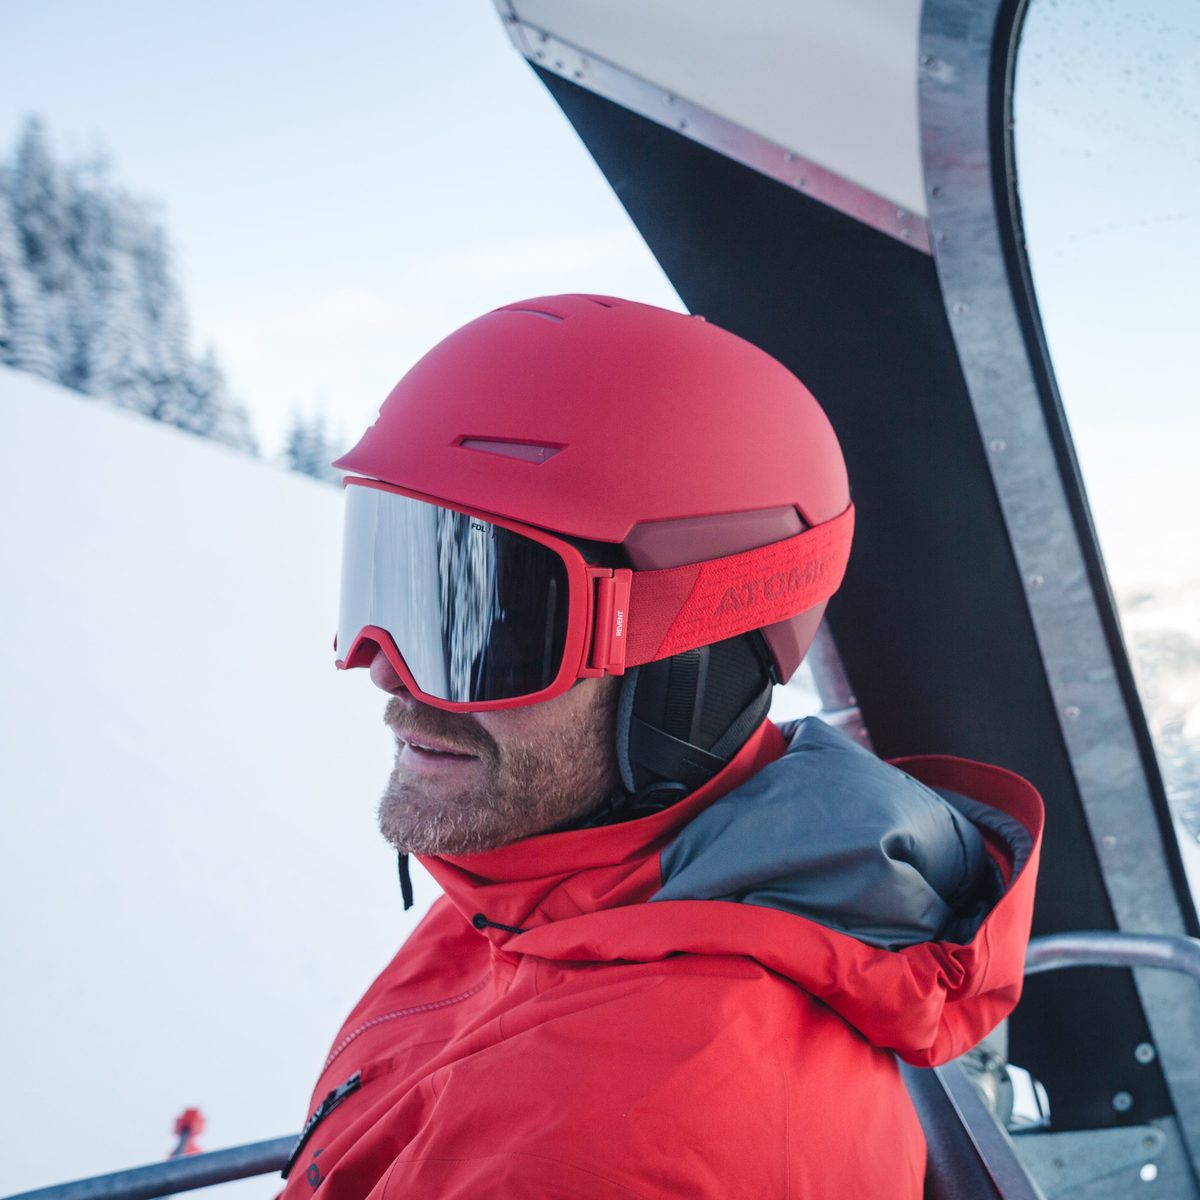 Atomic ski helmet and goggles